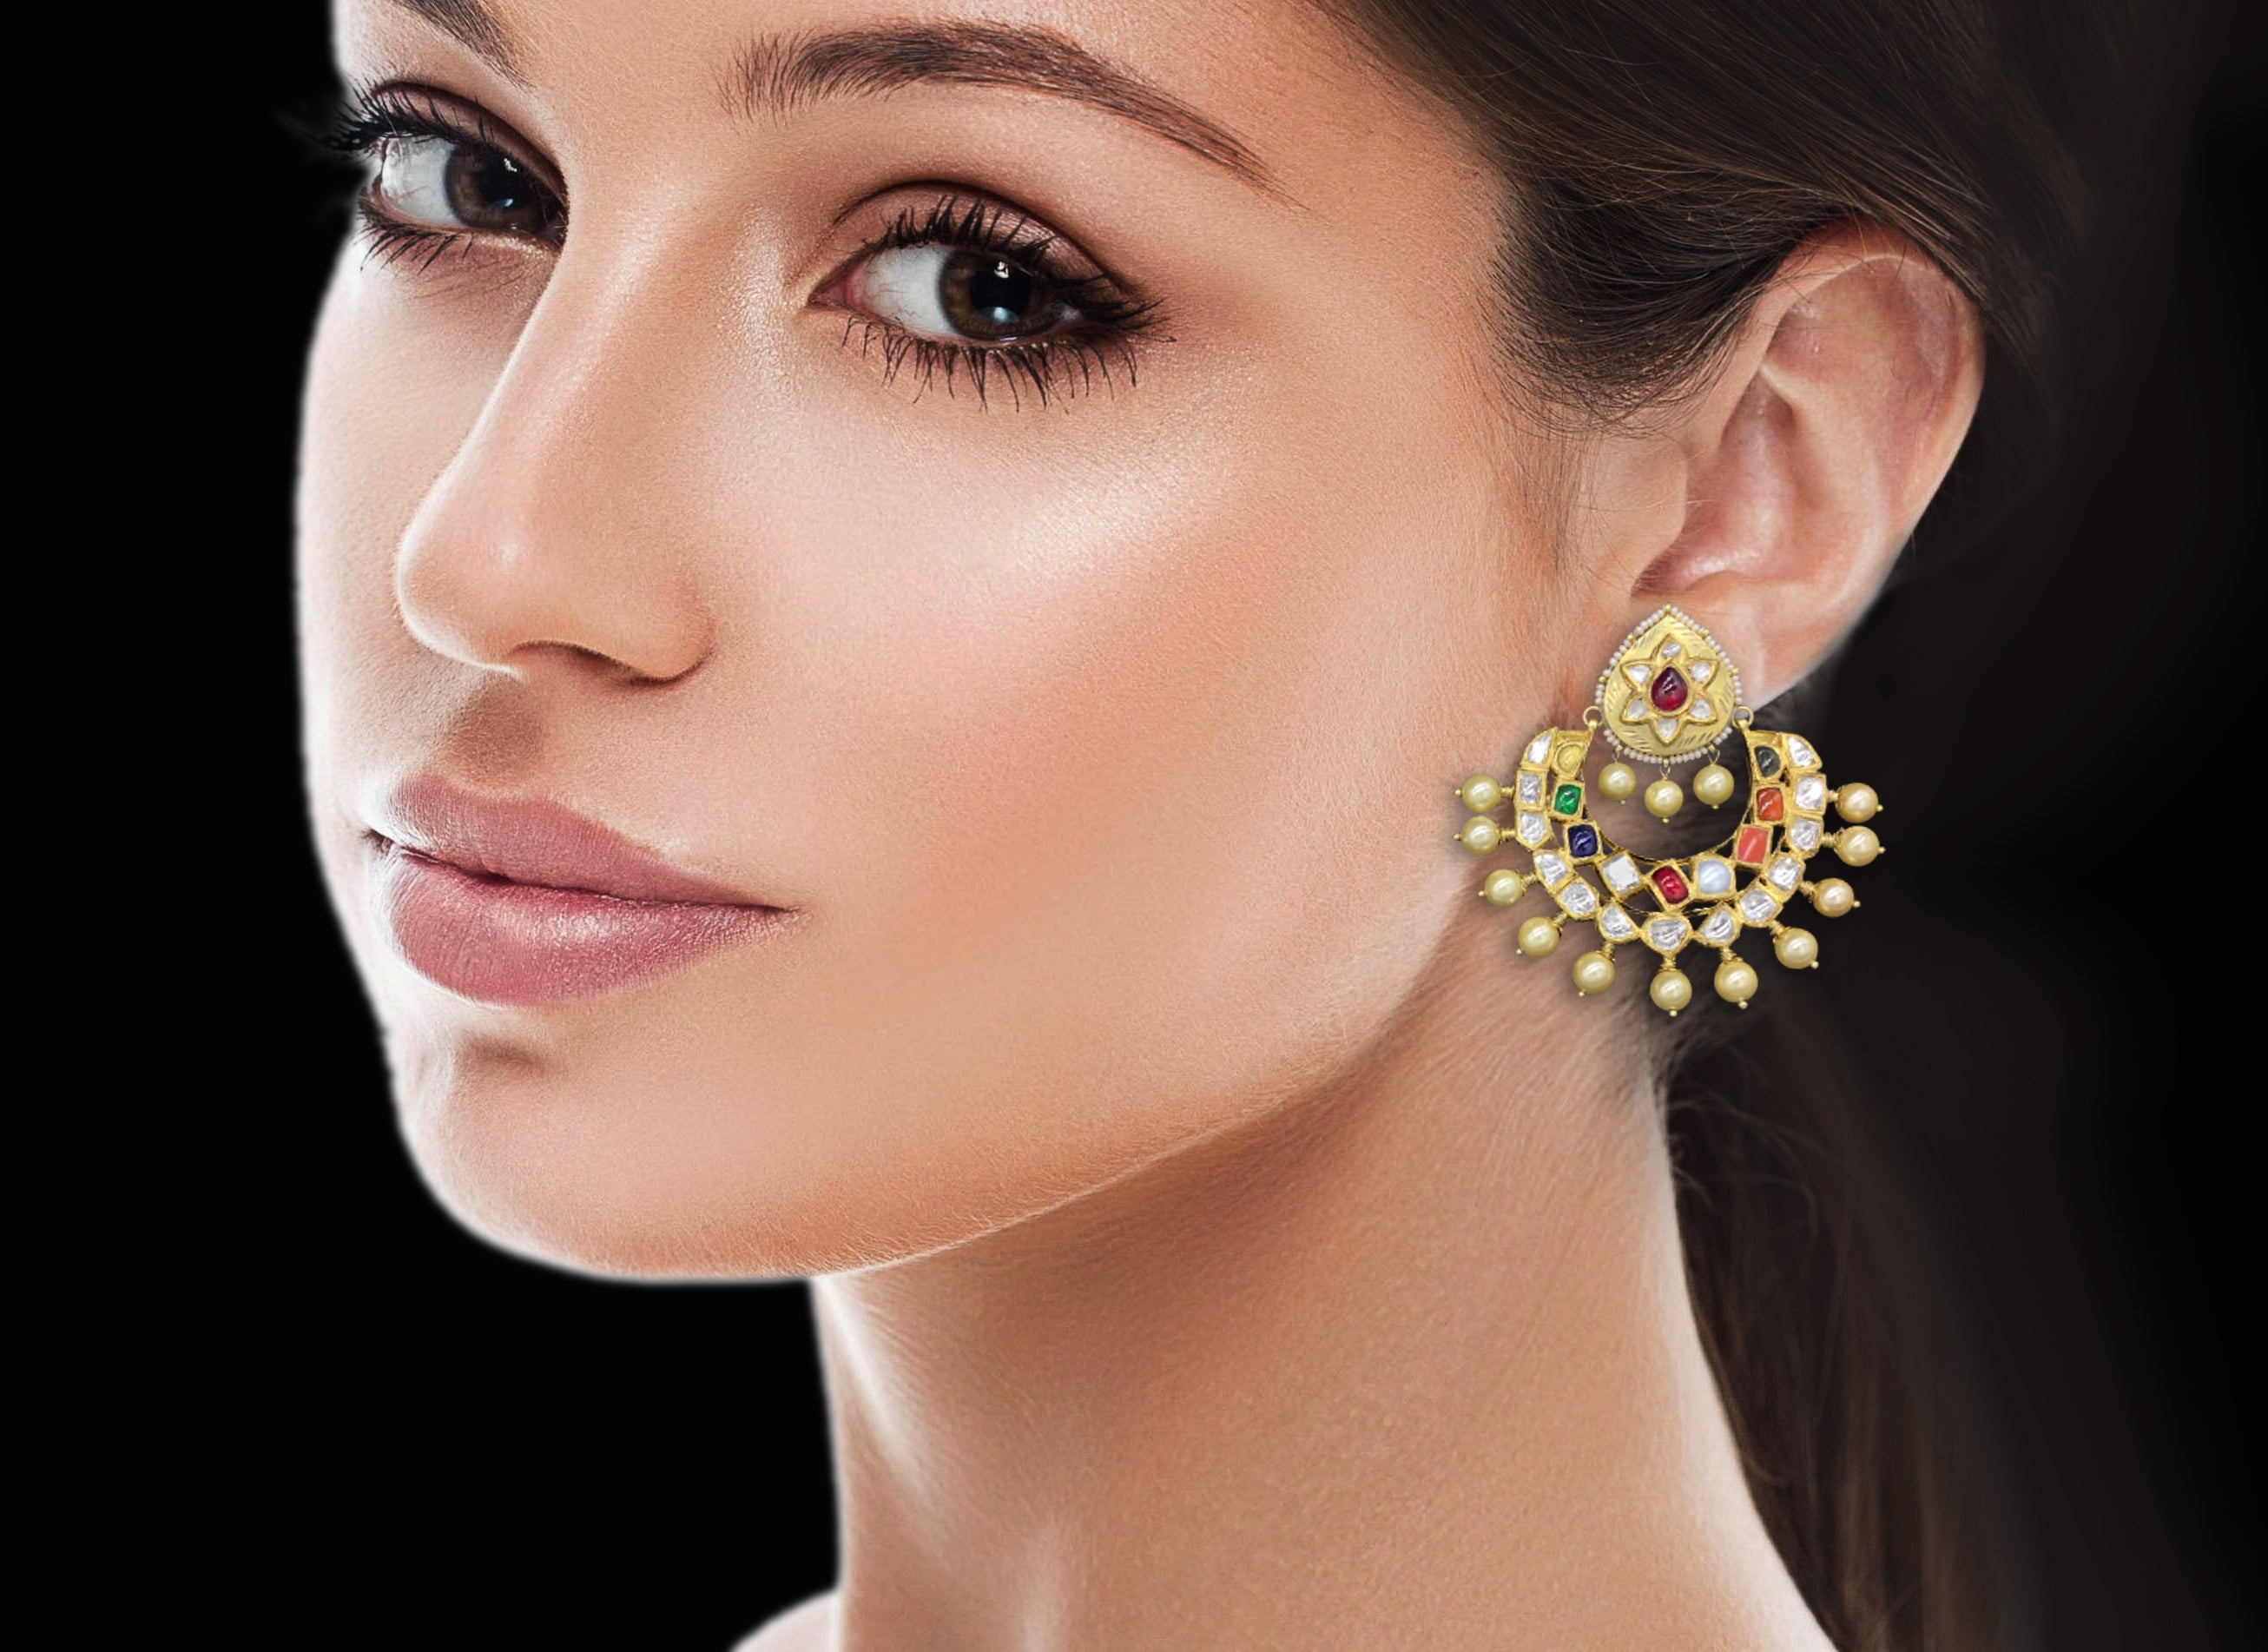 18k Gold and Diamond Polki Chand Bali Earring Pair with Navratna Stones - G. K. Ratnam